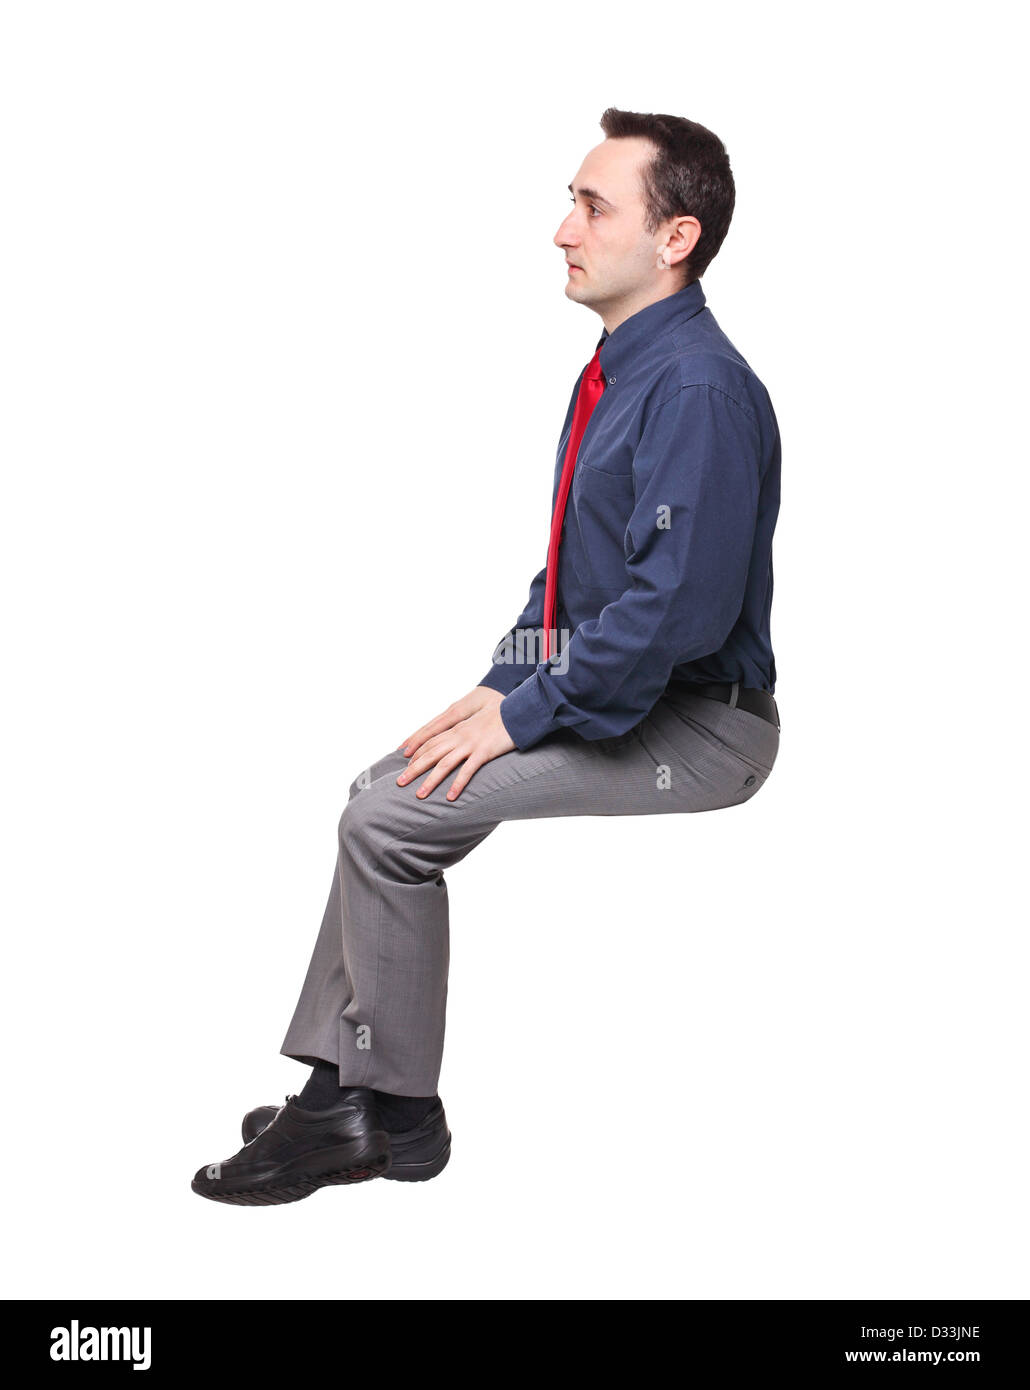 portrait of adult man sit pose on white background D33JNE